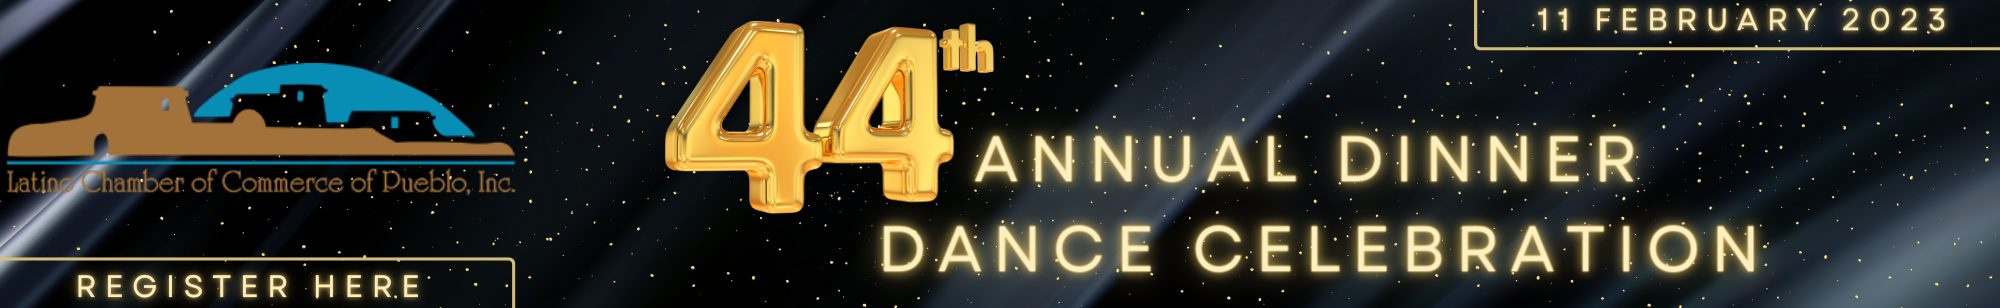 2023 44th Annual Dinner Dance Website Banner Ad